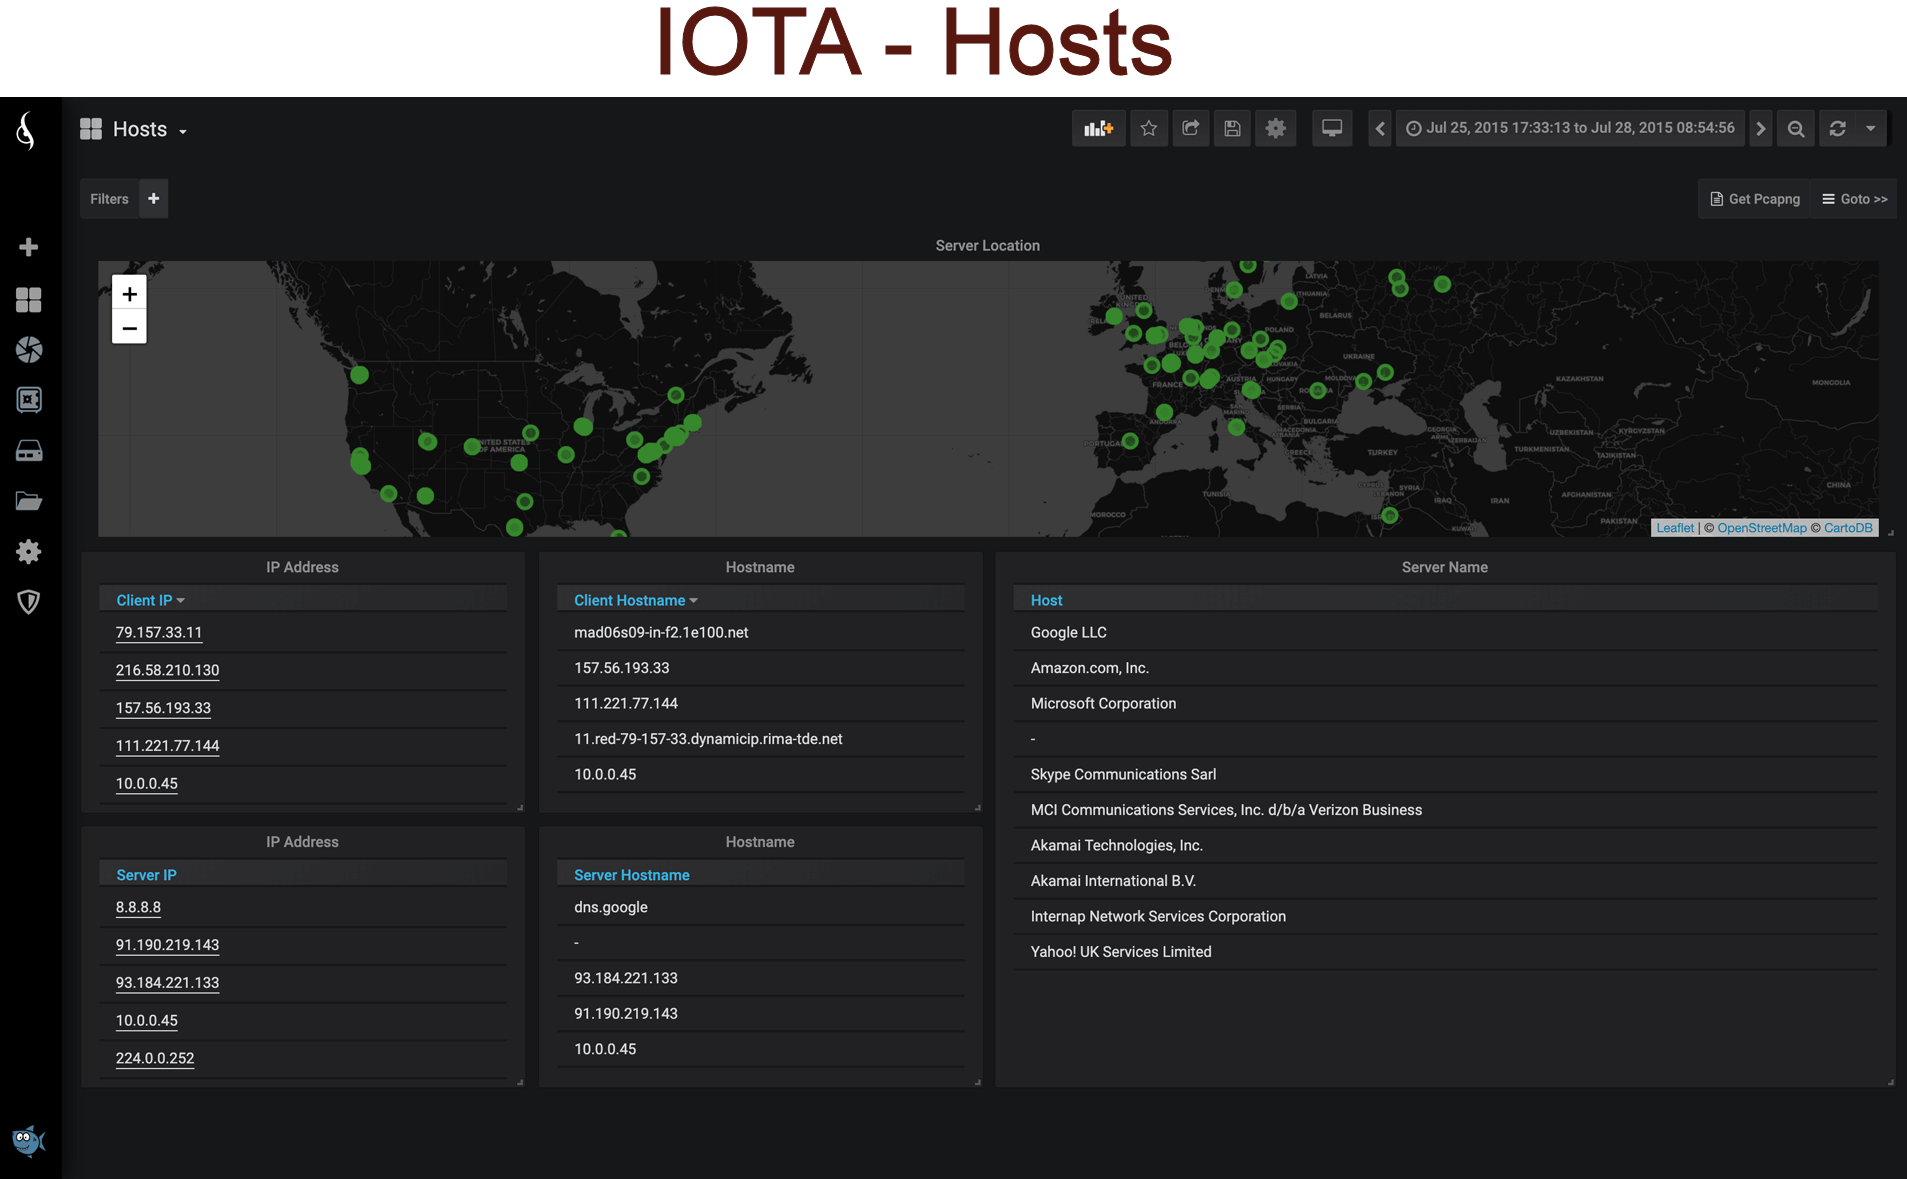 IOTA - Hosts